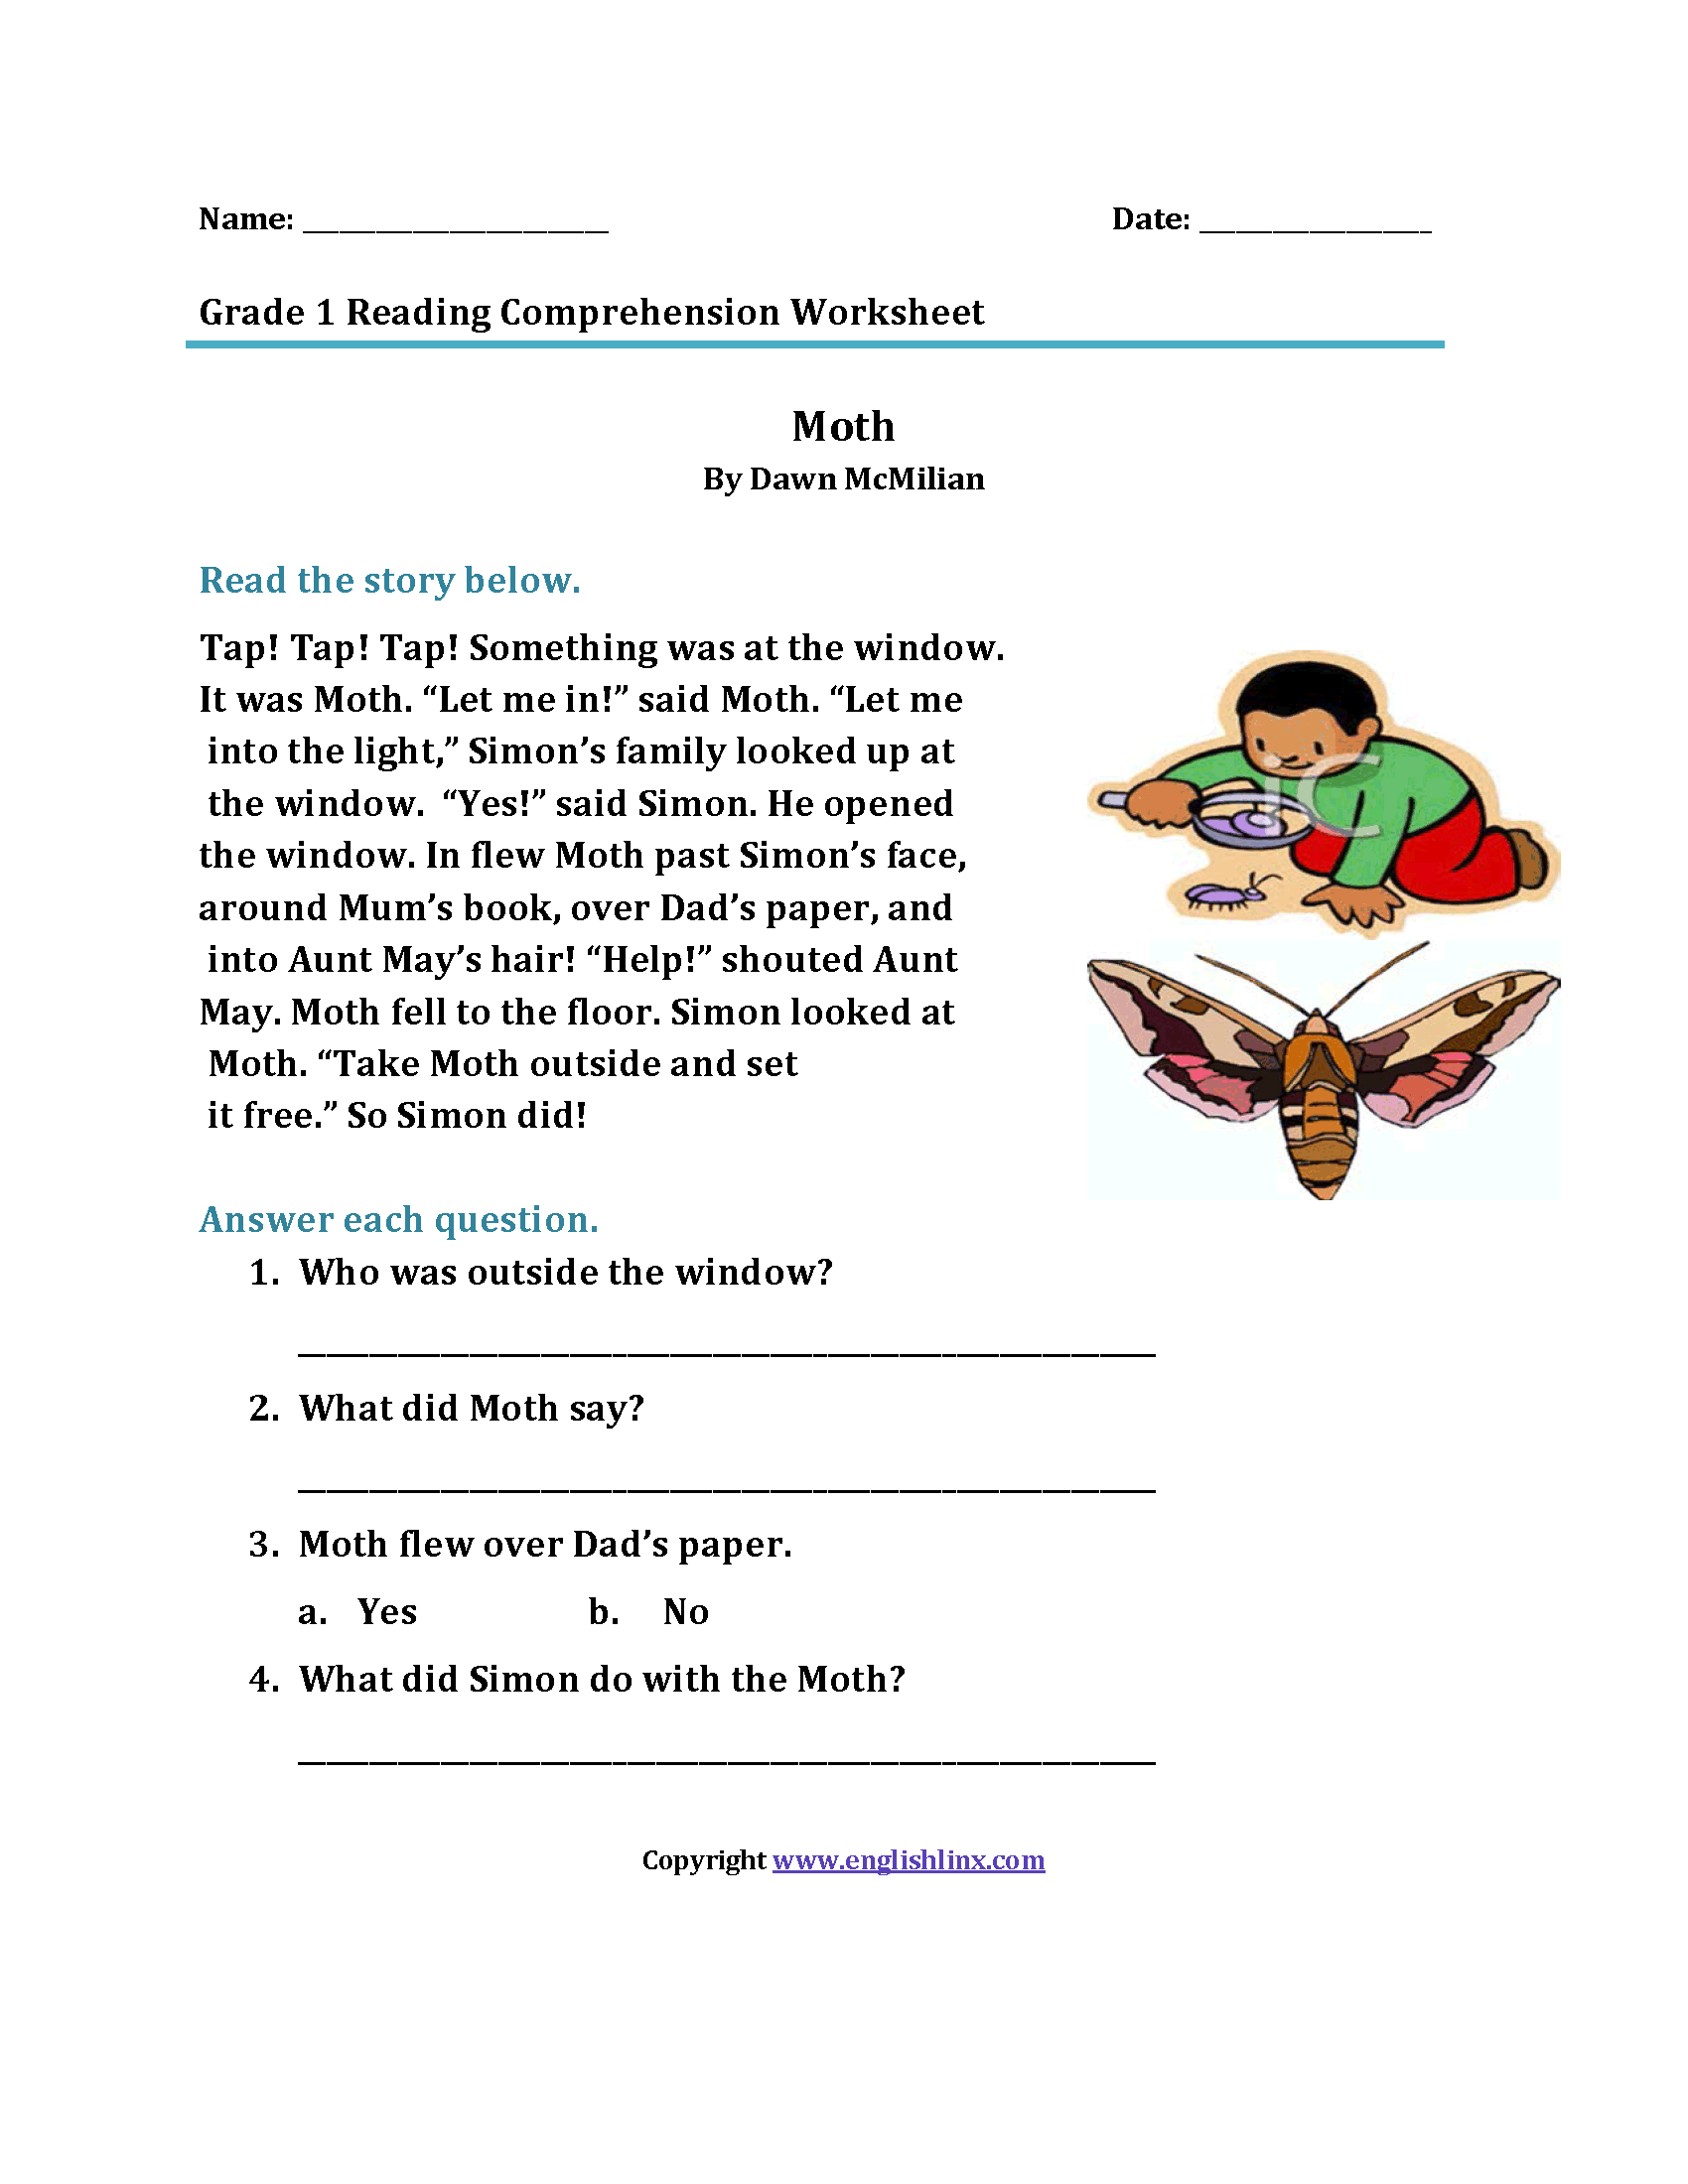 summer-review-kindergarten-math-literacy-worksheets-activities-reading-comprehension